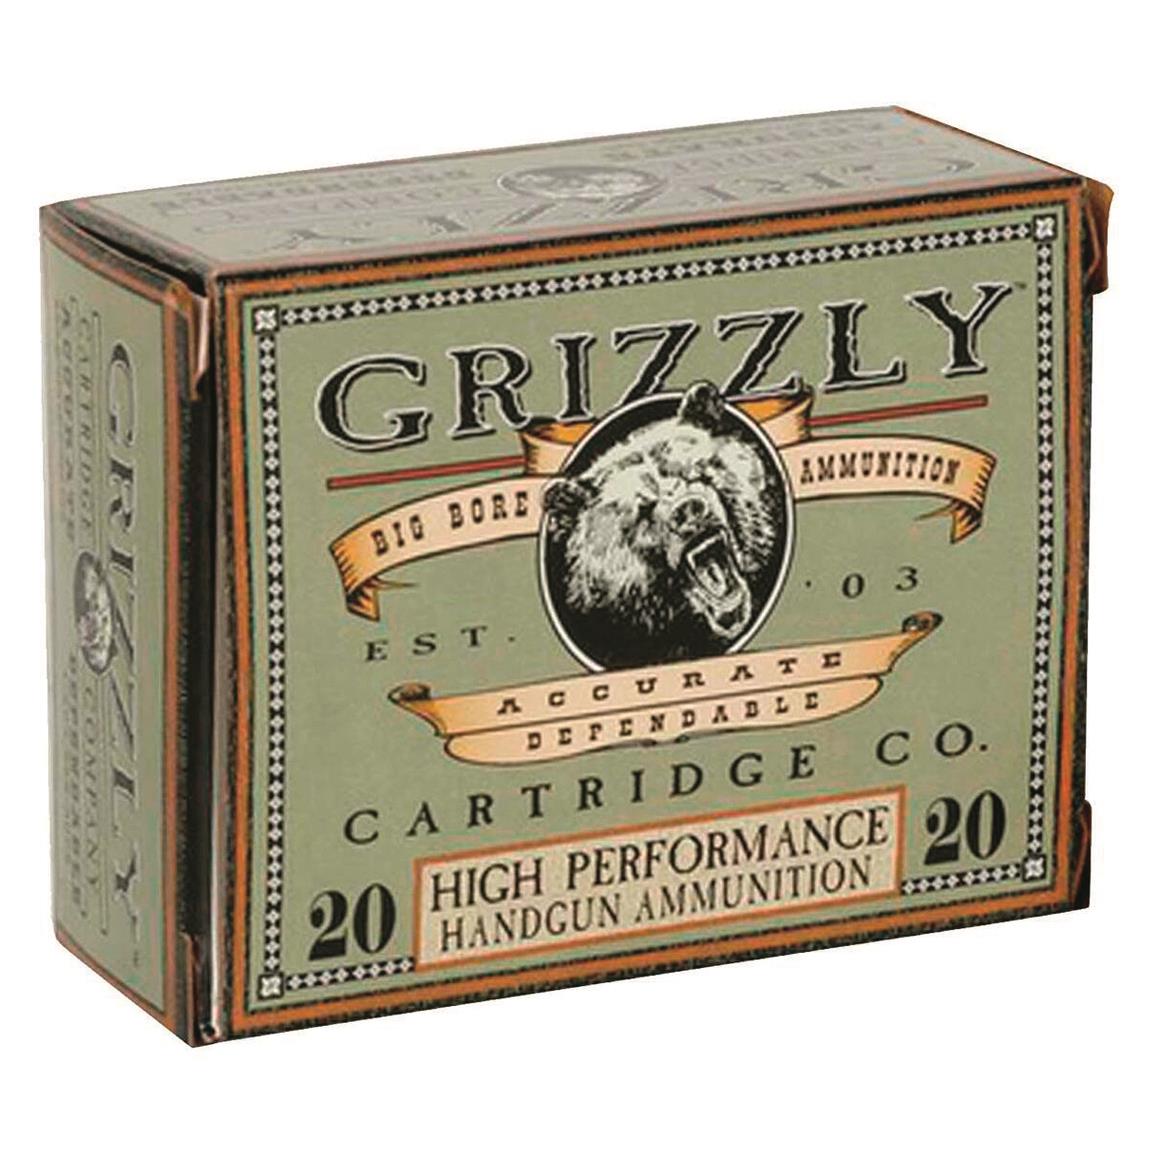 Grizzly Cartridge Co. High Performance Handgun, .45 ACP, JHP, 230 Grain, 20 Rounds